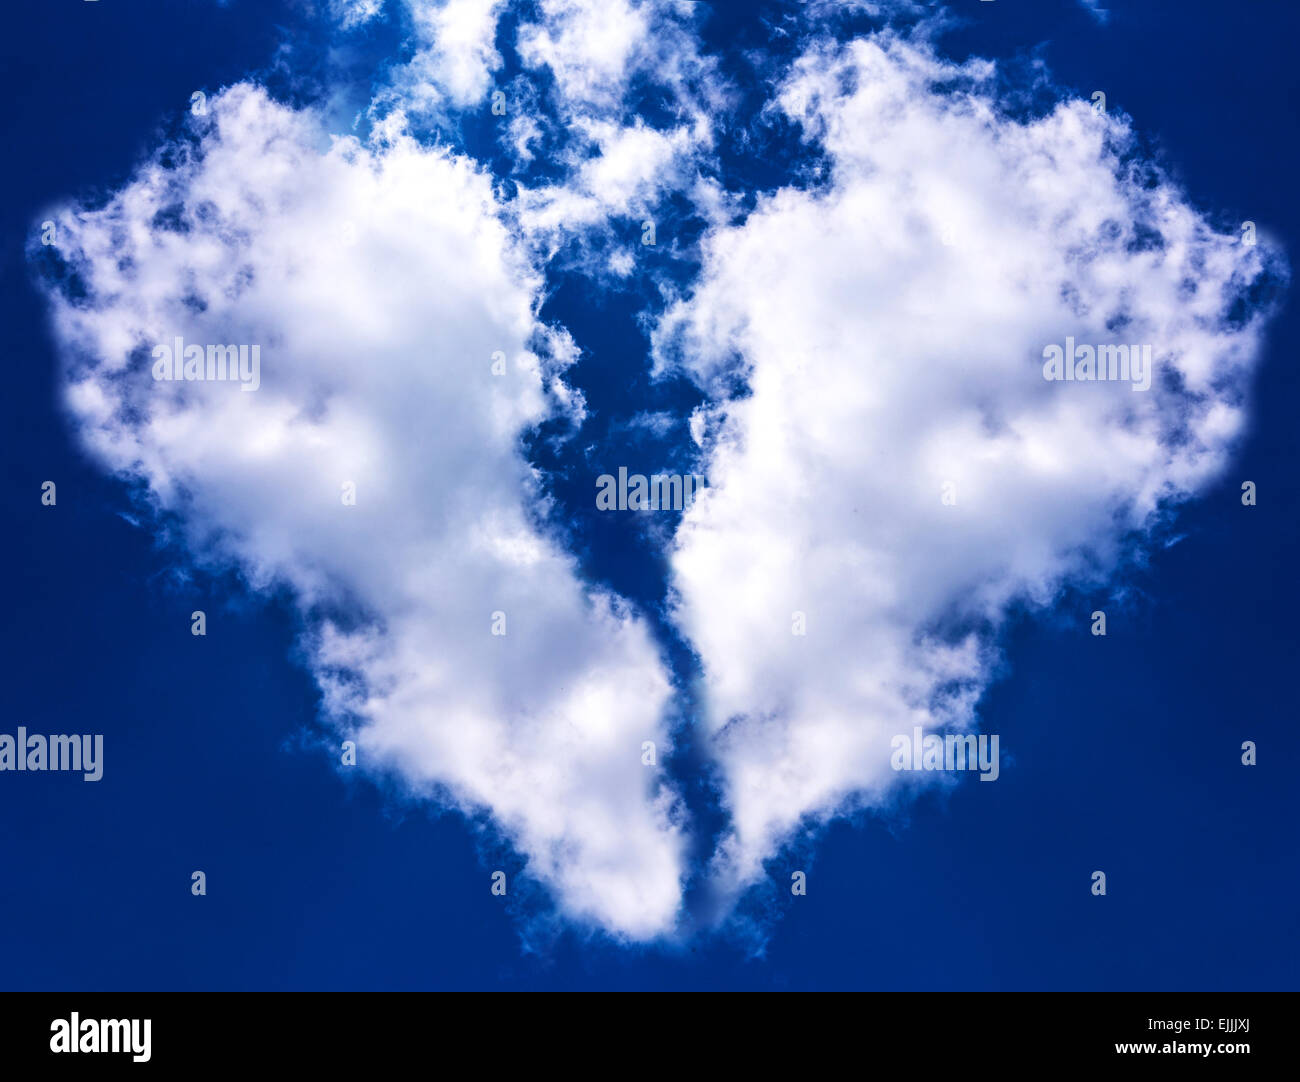 White smoke cloud with broken heart shape. Stock Photo